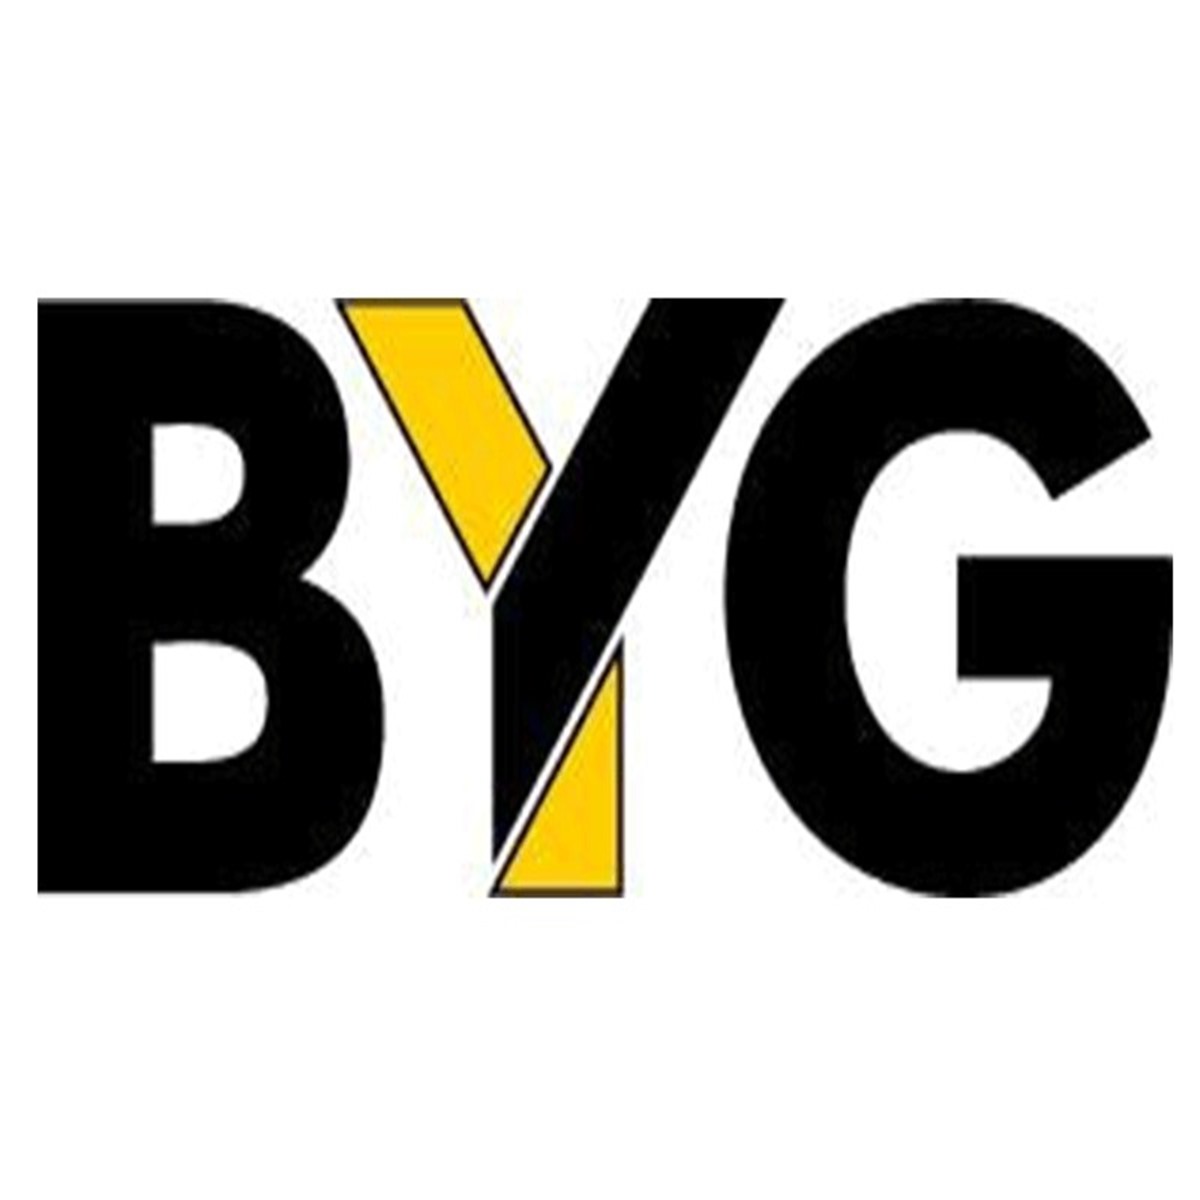 B Y G logo.png  Thumbnail0